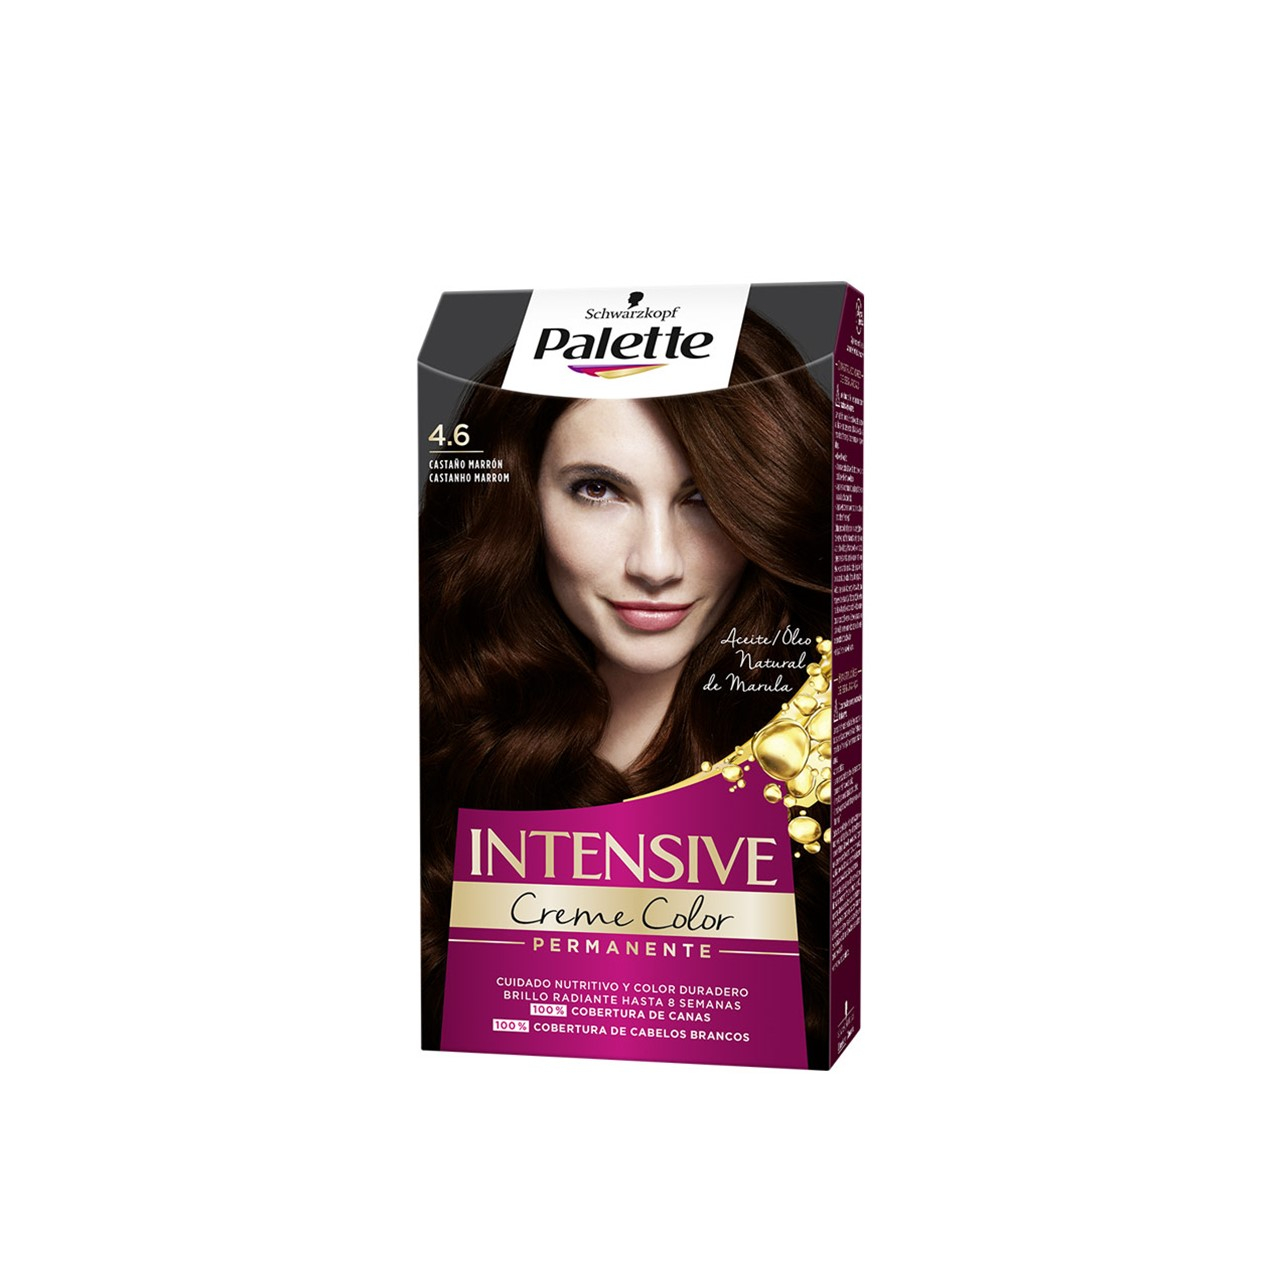 Schwarzkopf Palette Intensive Creme Color Permanent Hair Dye 4.6 Maroon Brown